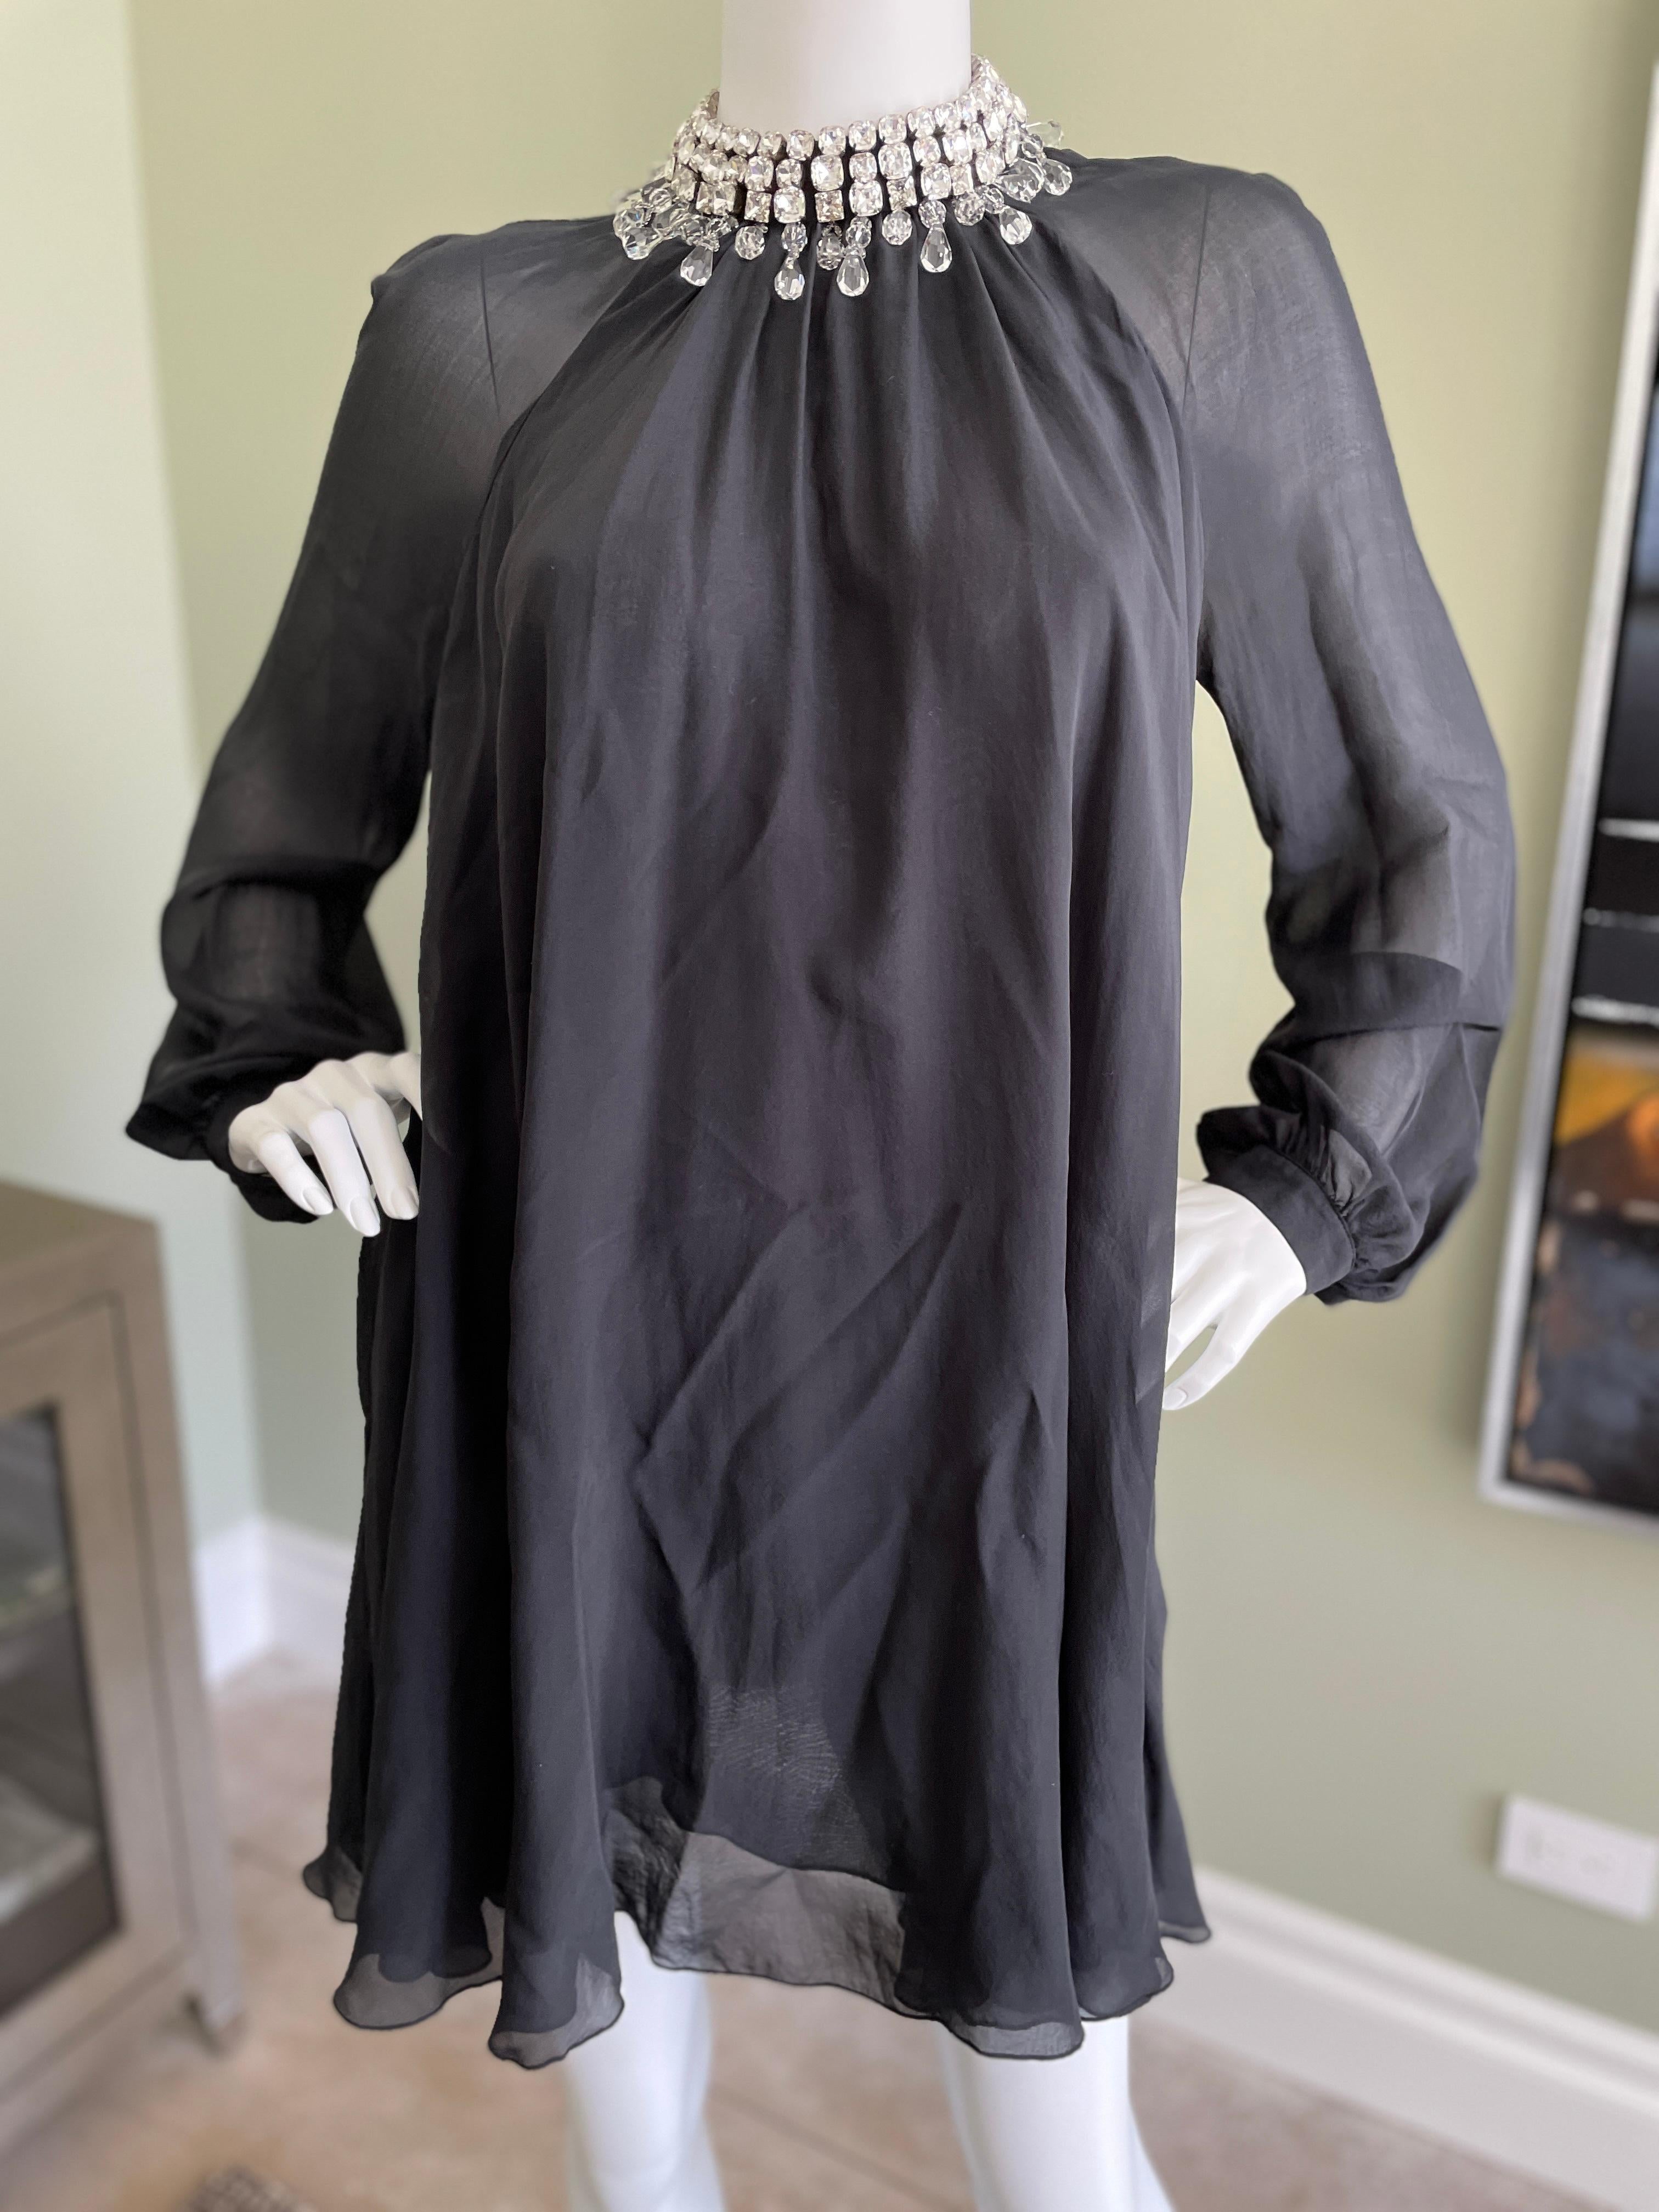  Azzaro Black Vintage Black Silk Cocktail Dress with Swarovski Crystal Necklace For Sale 1